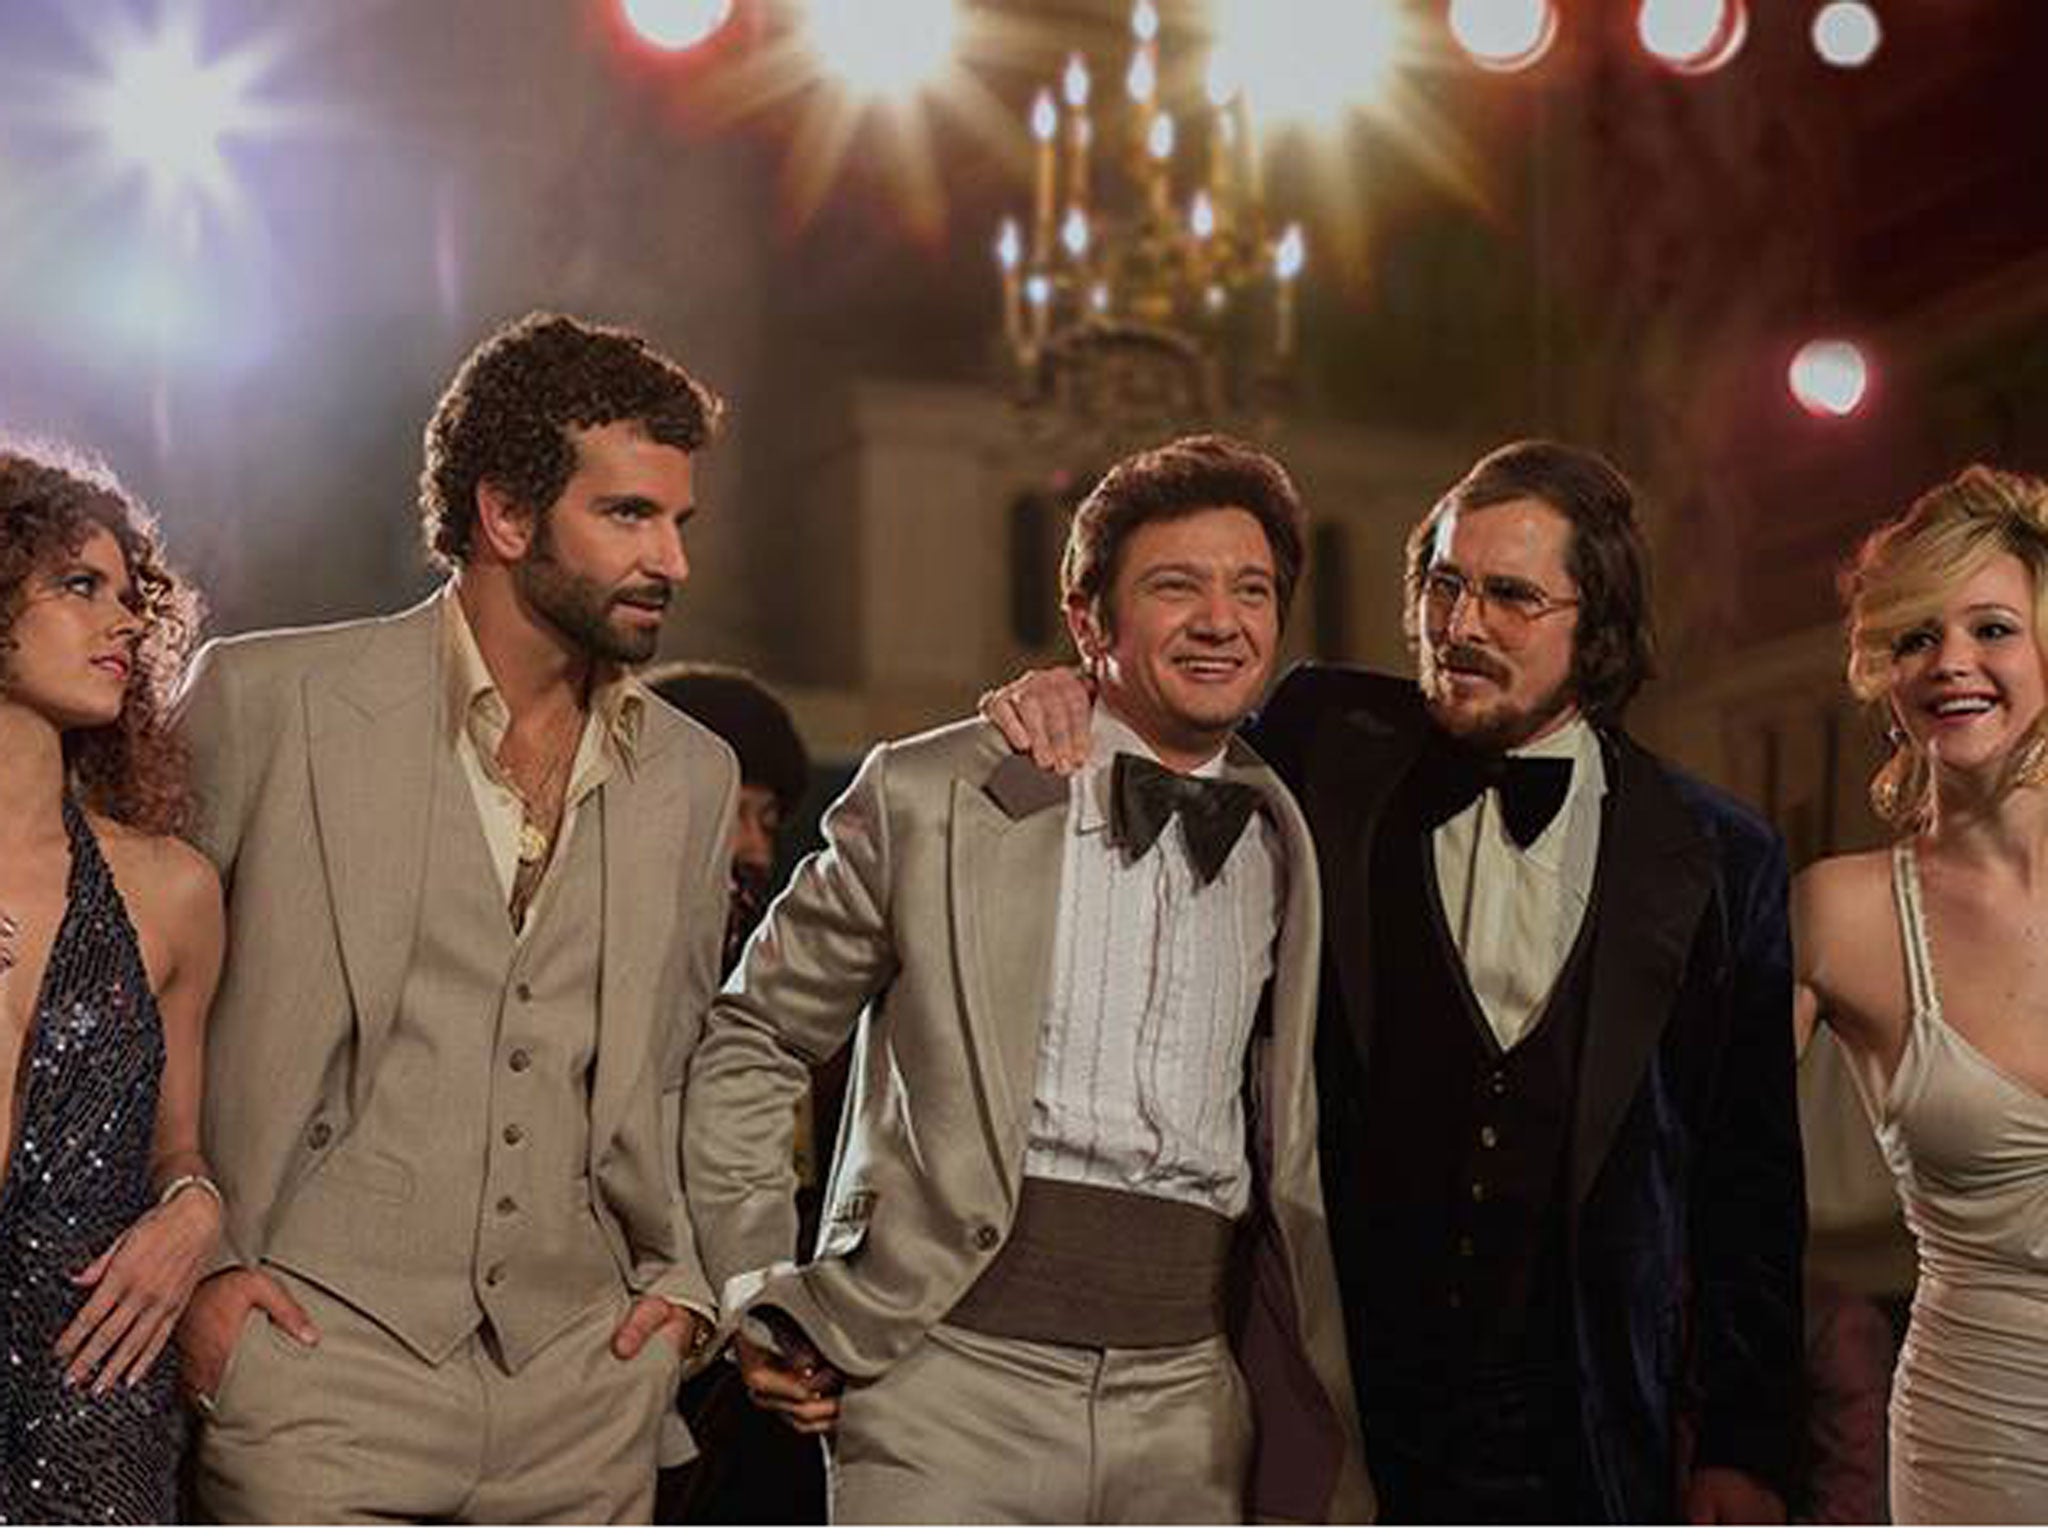 Amy Adams, Bradley Cooper, Jeremy Renner, Christian Bale and Jennifer Lawrence in American Hustle